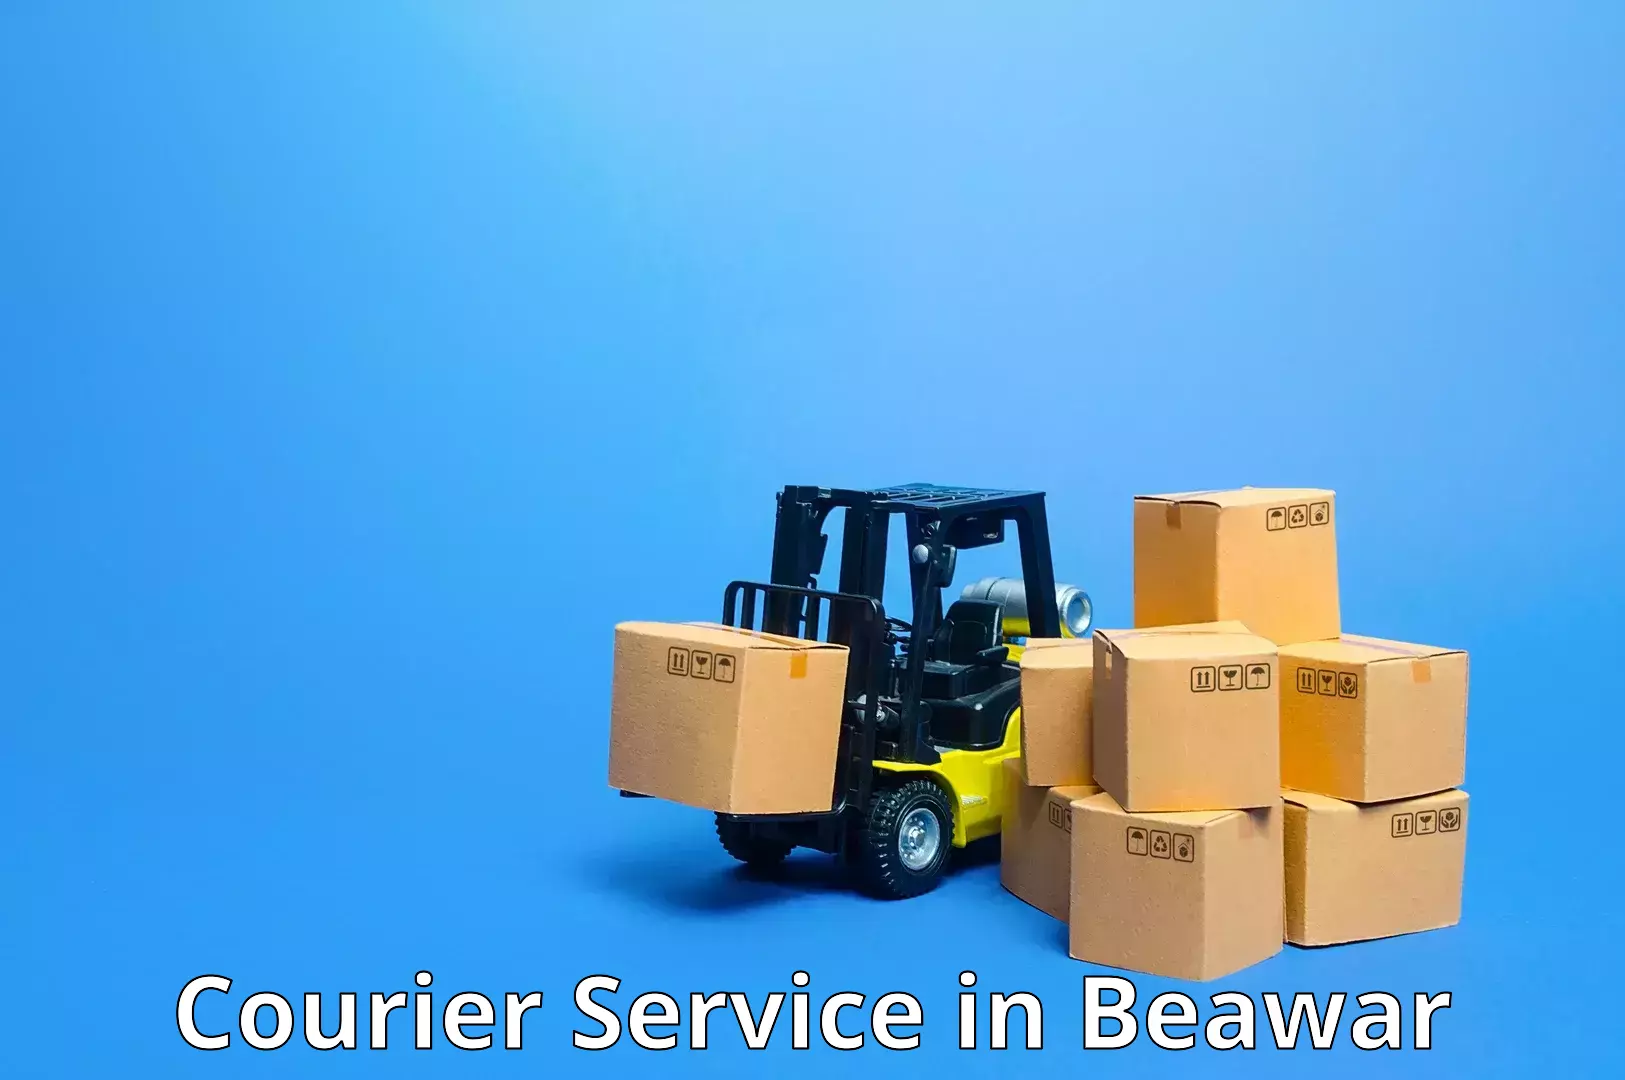 Logistics efficiency in Beawar